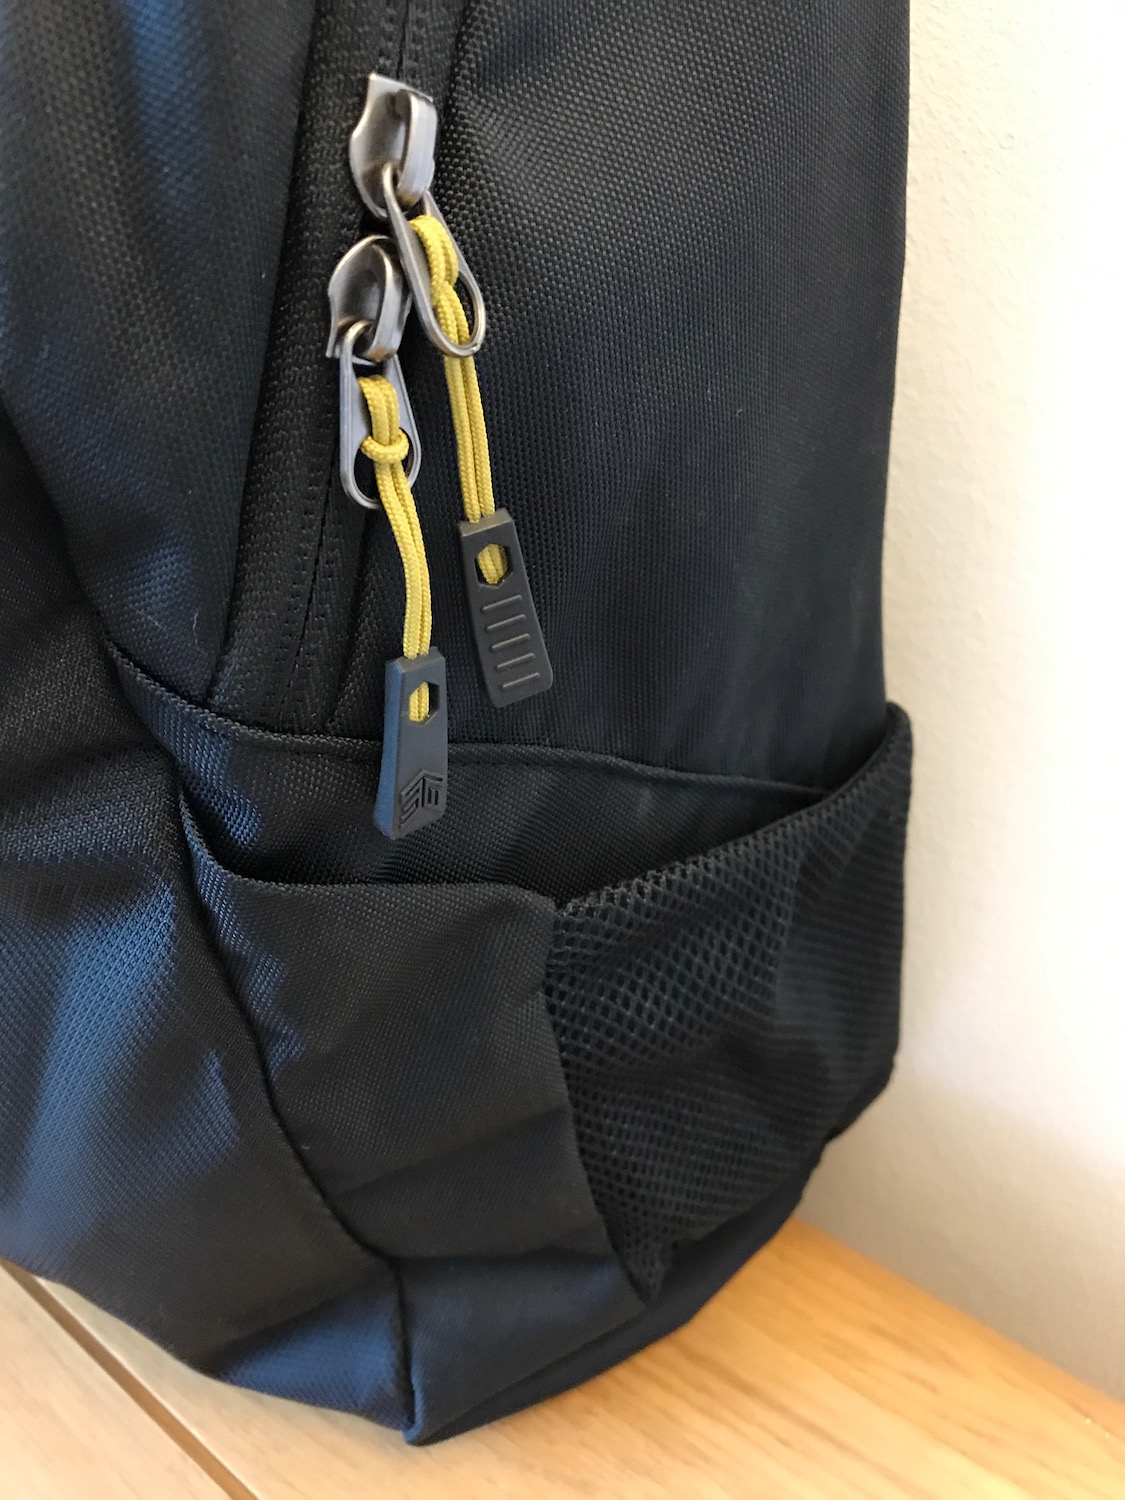 STM Saga backpack - zips